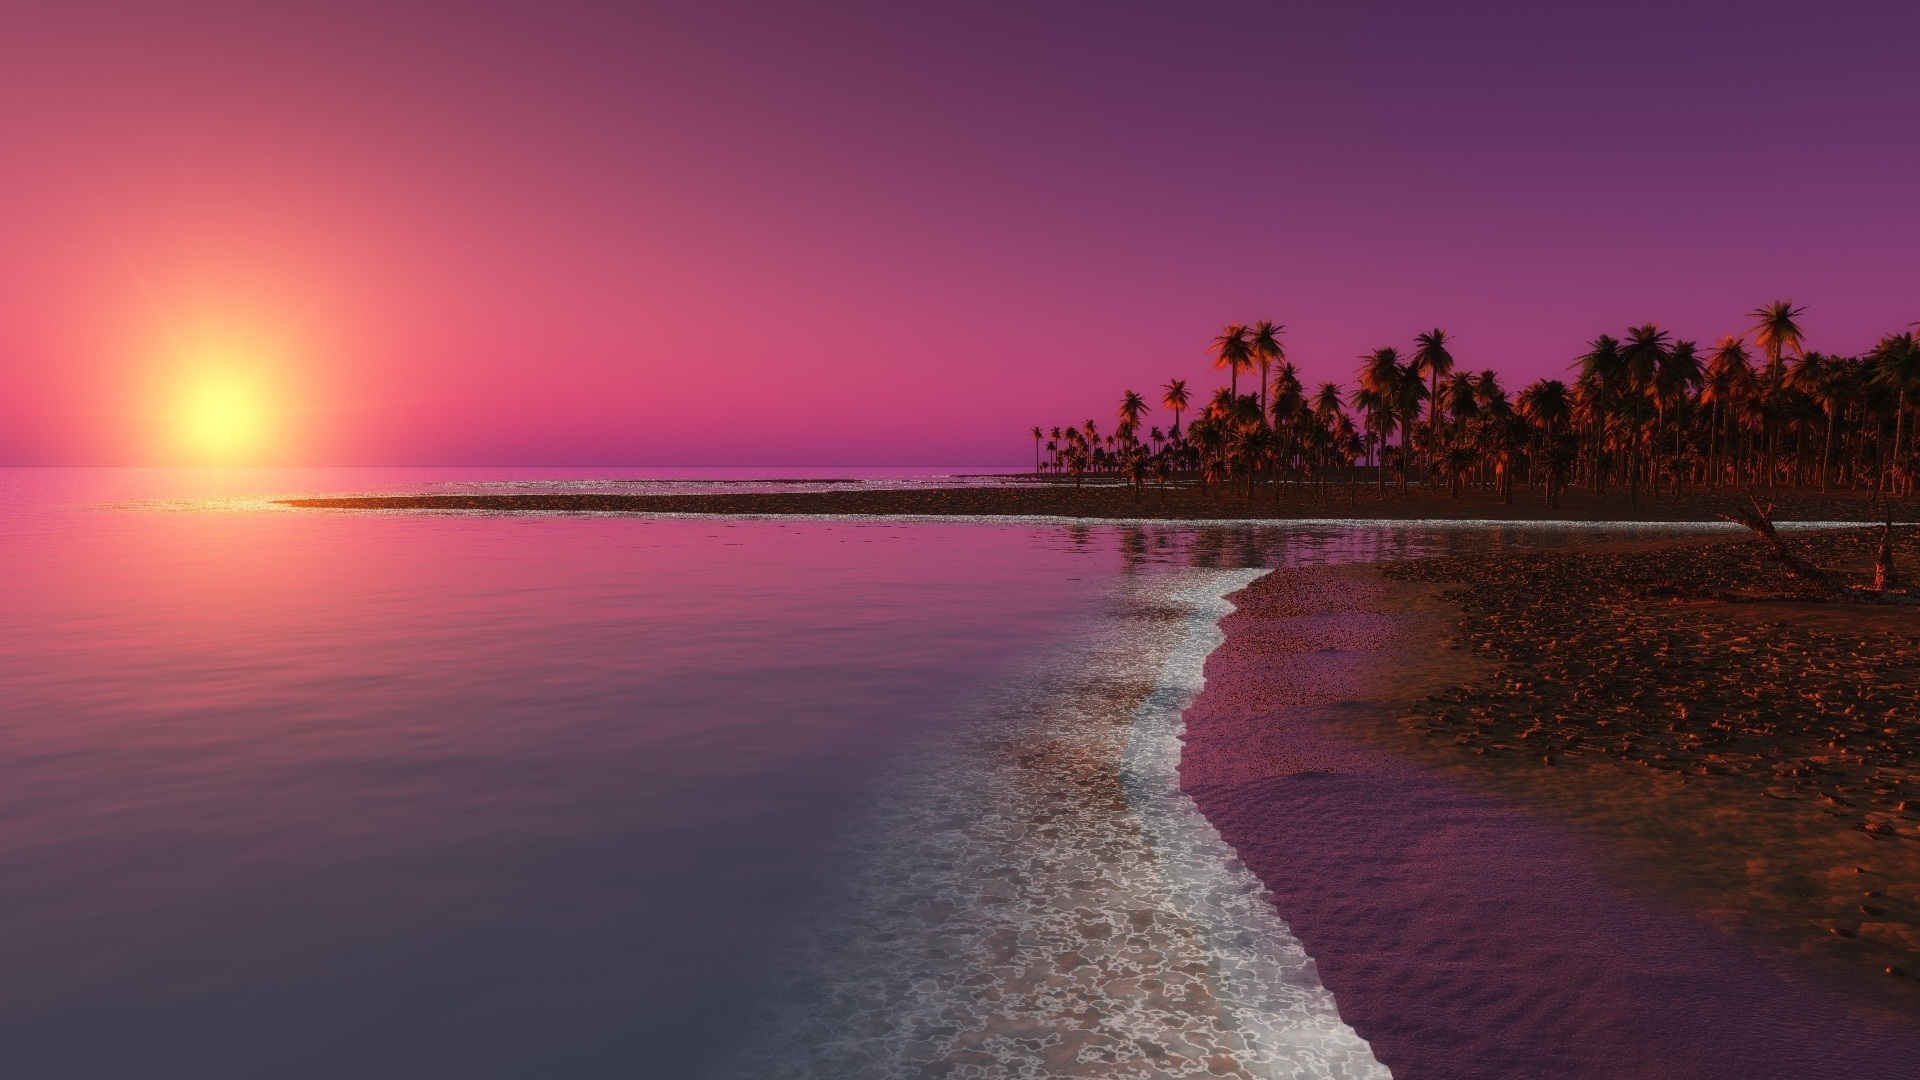 General 1920x1080 beach sea Sun palm trees sand water pink sunset nature landscape